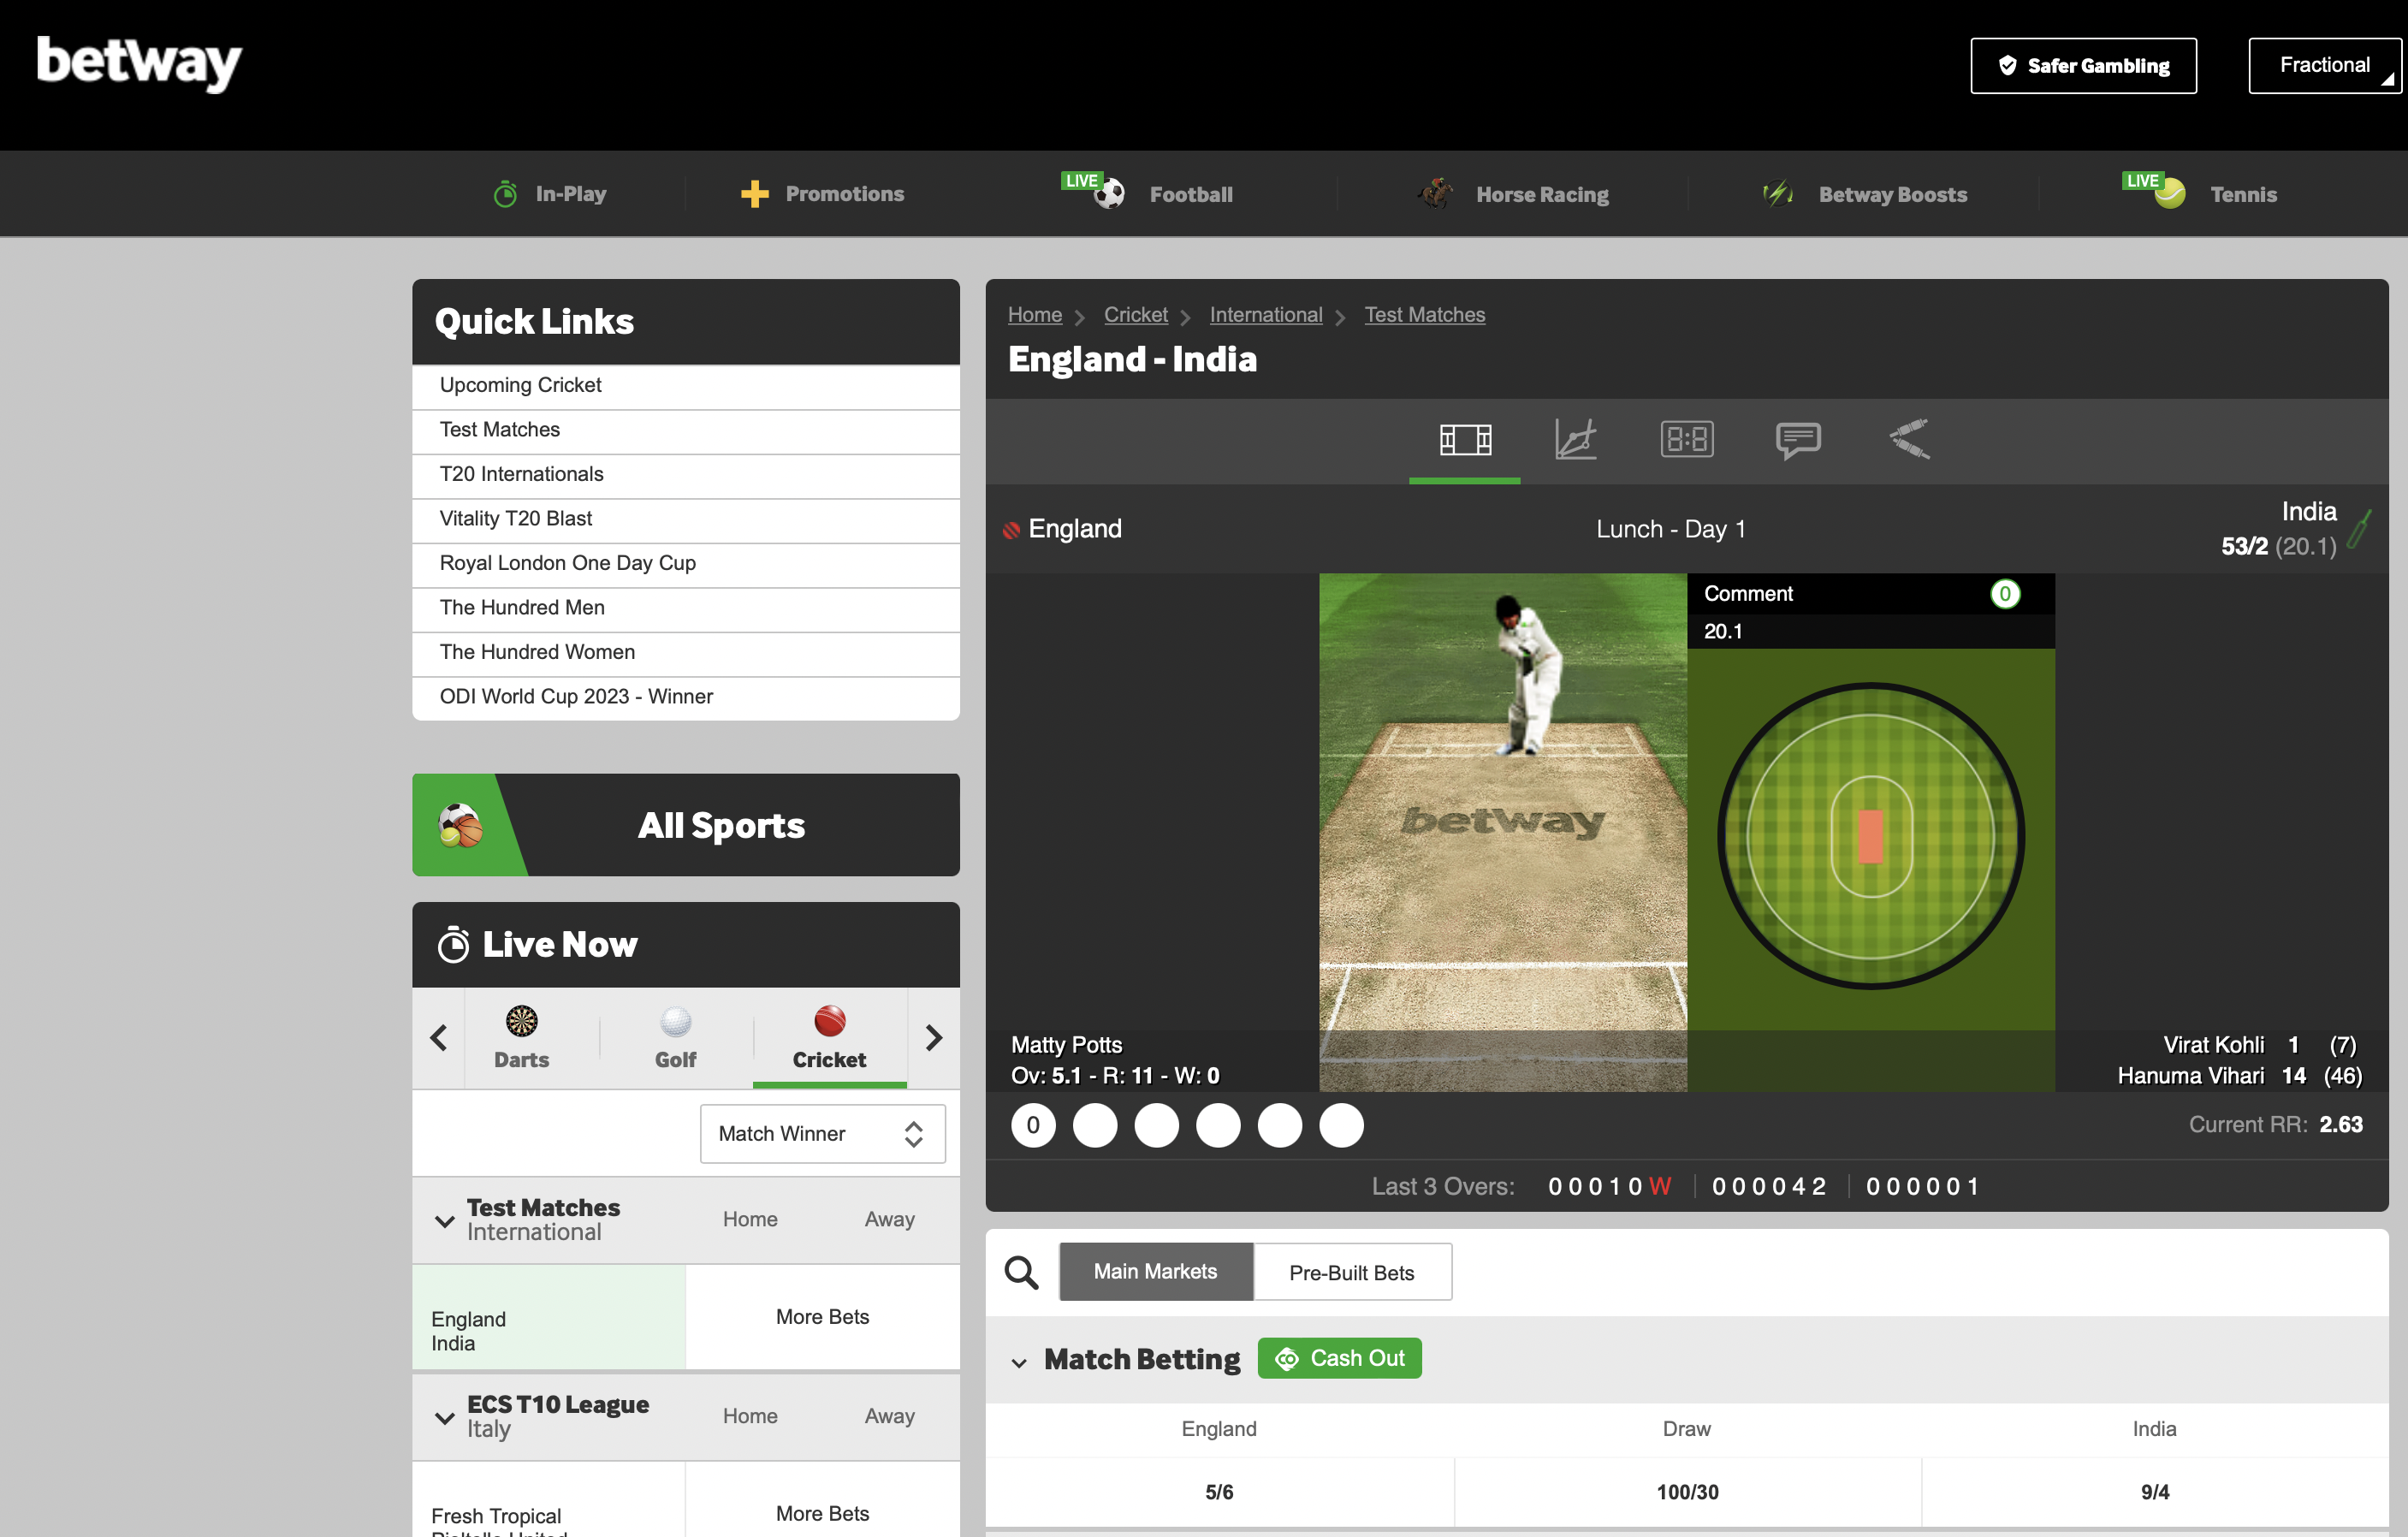 A screen grab of the Betway cricket betting portal